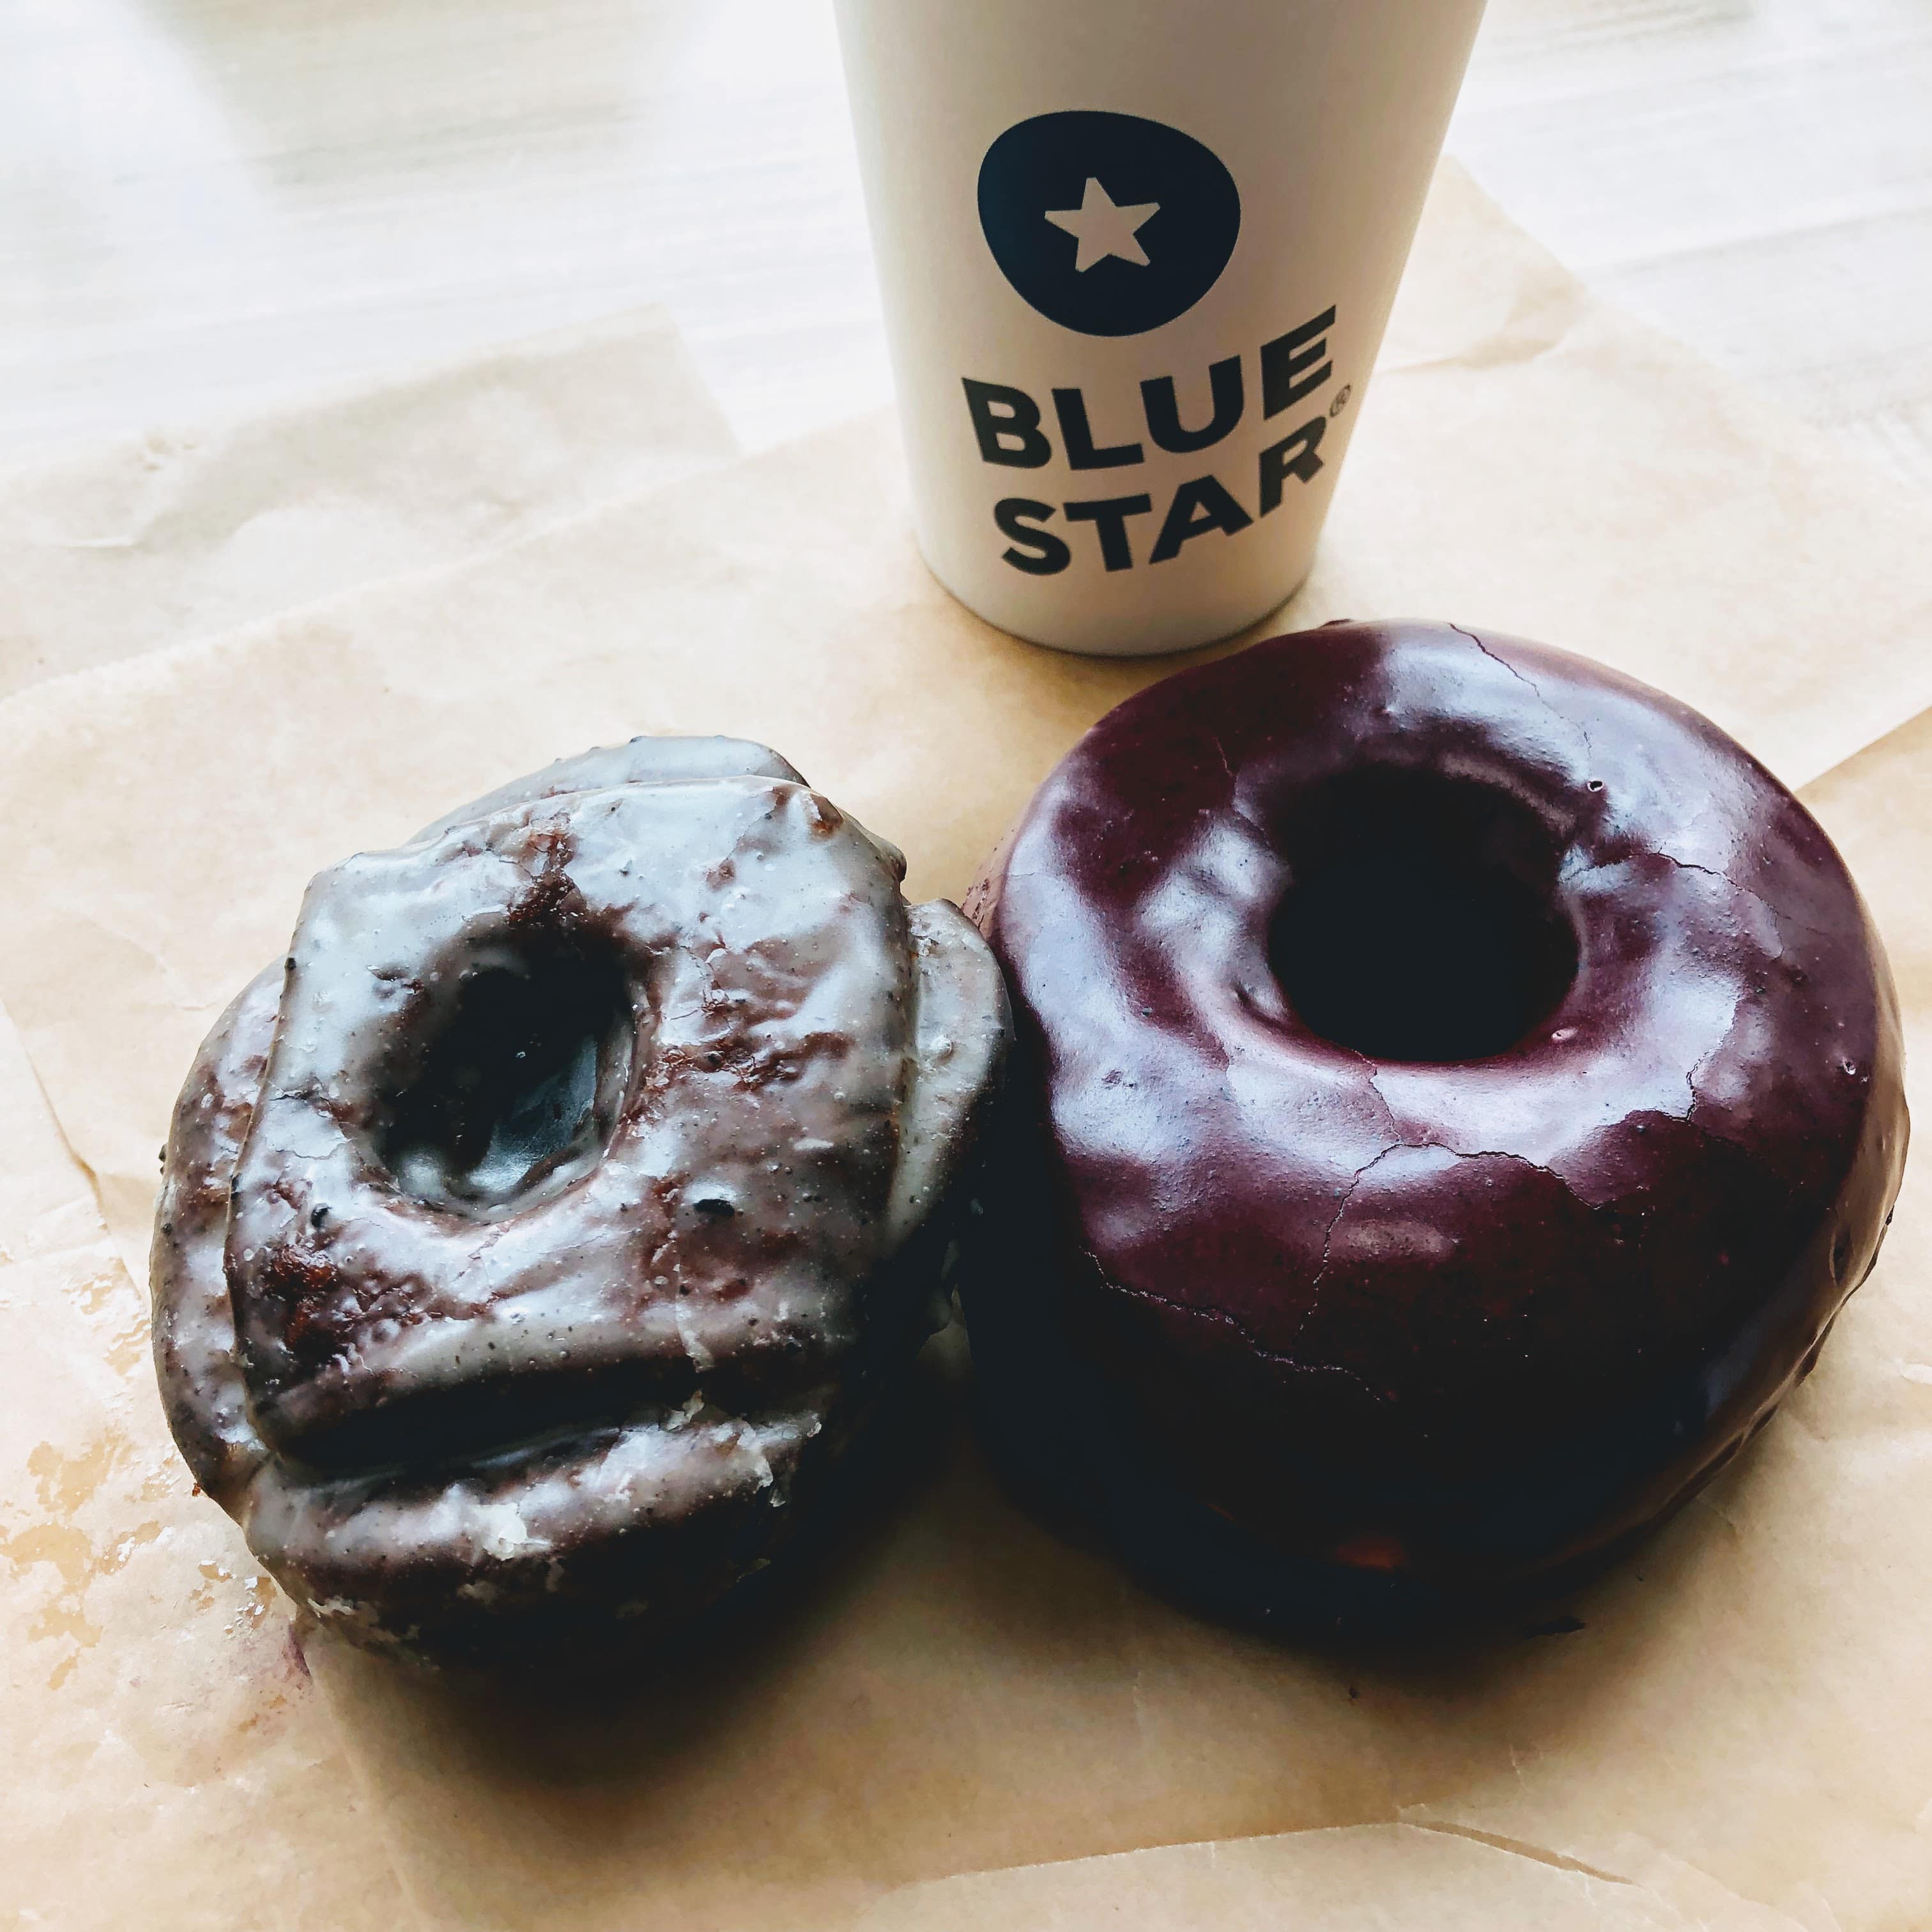 blue star donuts portland oregon